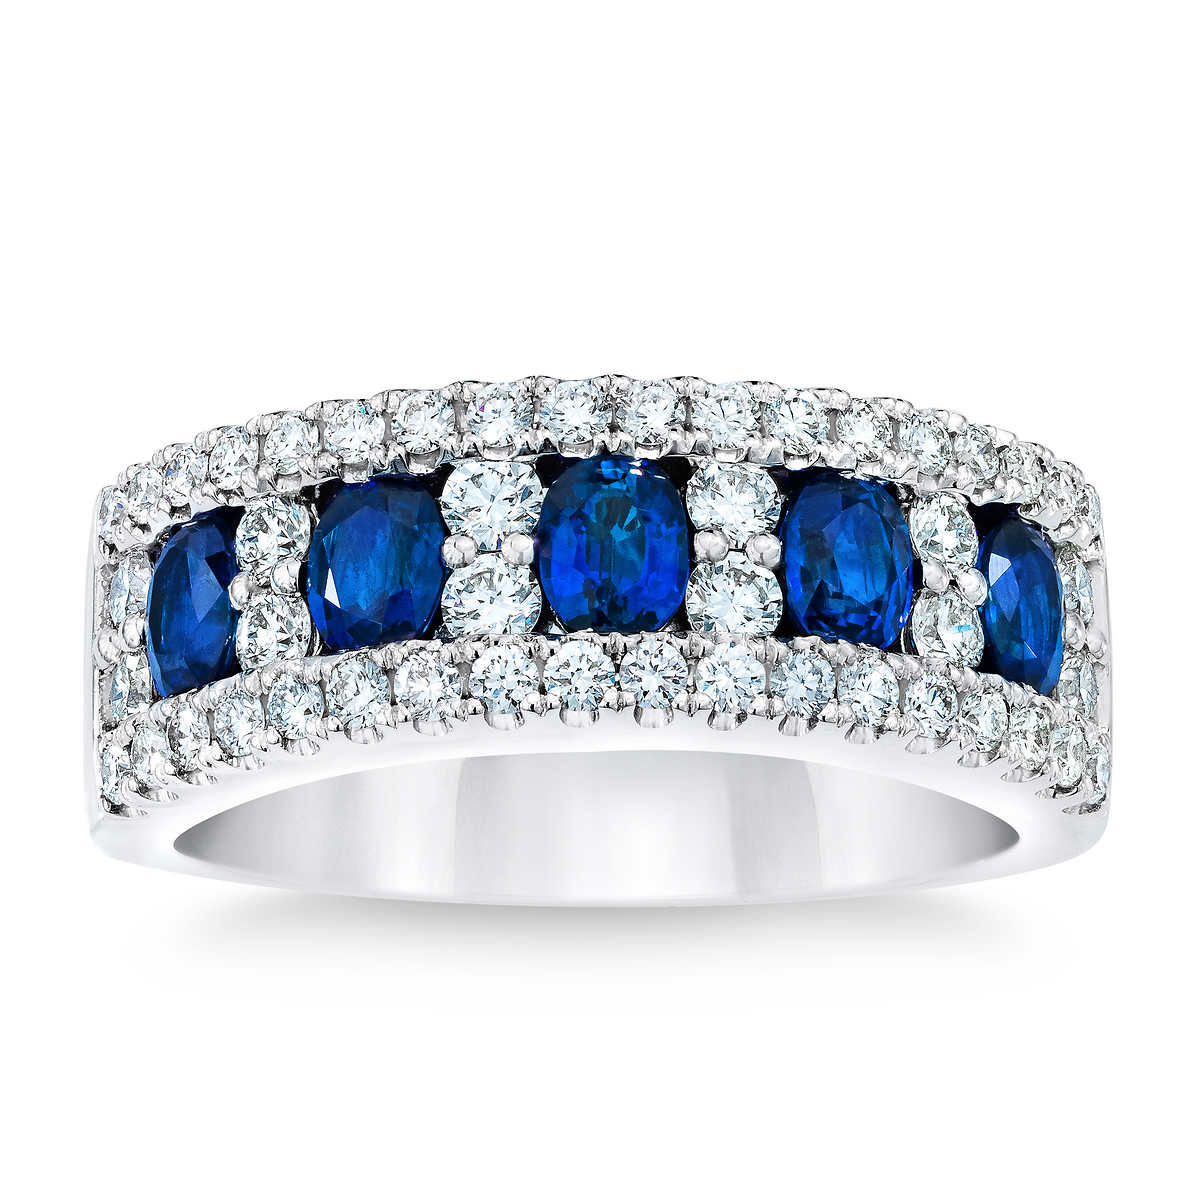 Round Blue Sapphire Engagement Ring Wedding Band white Rhodium Plated Size 7 